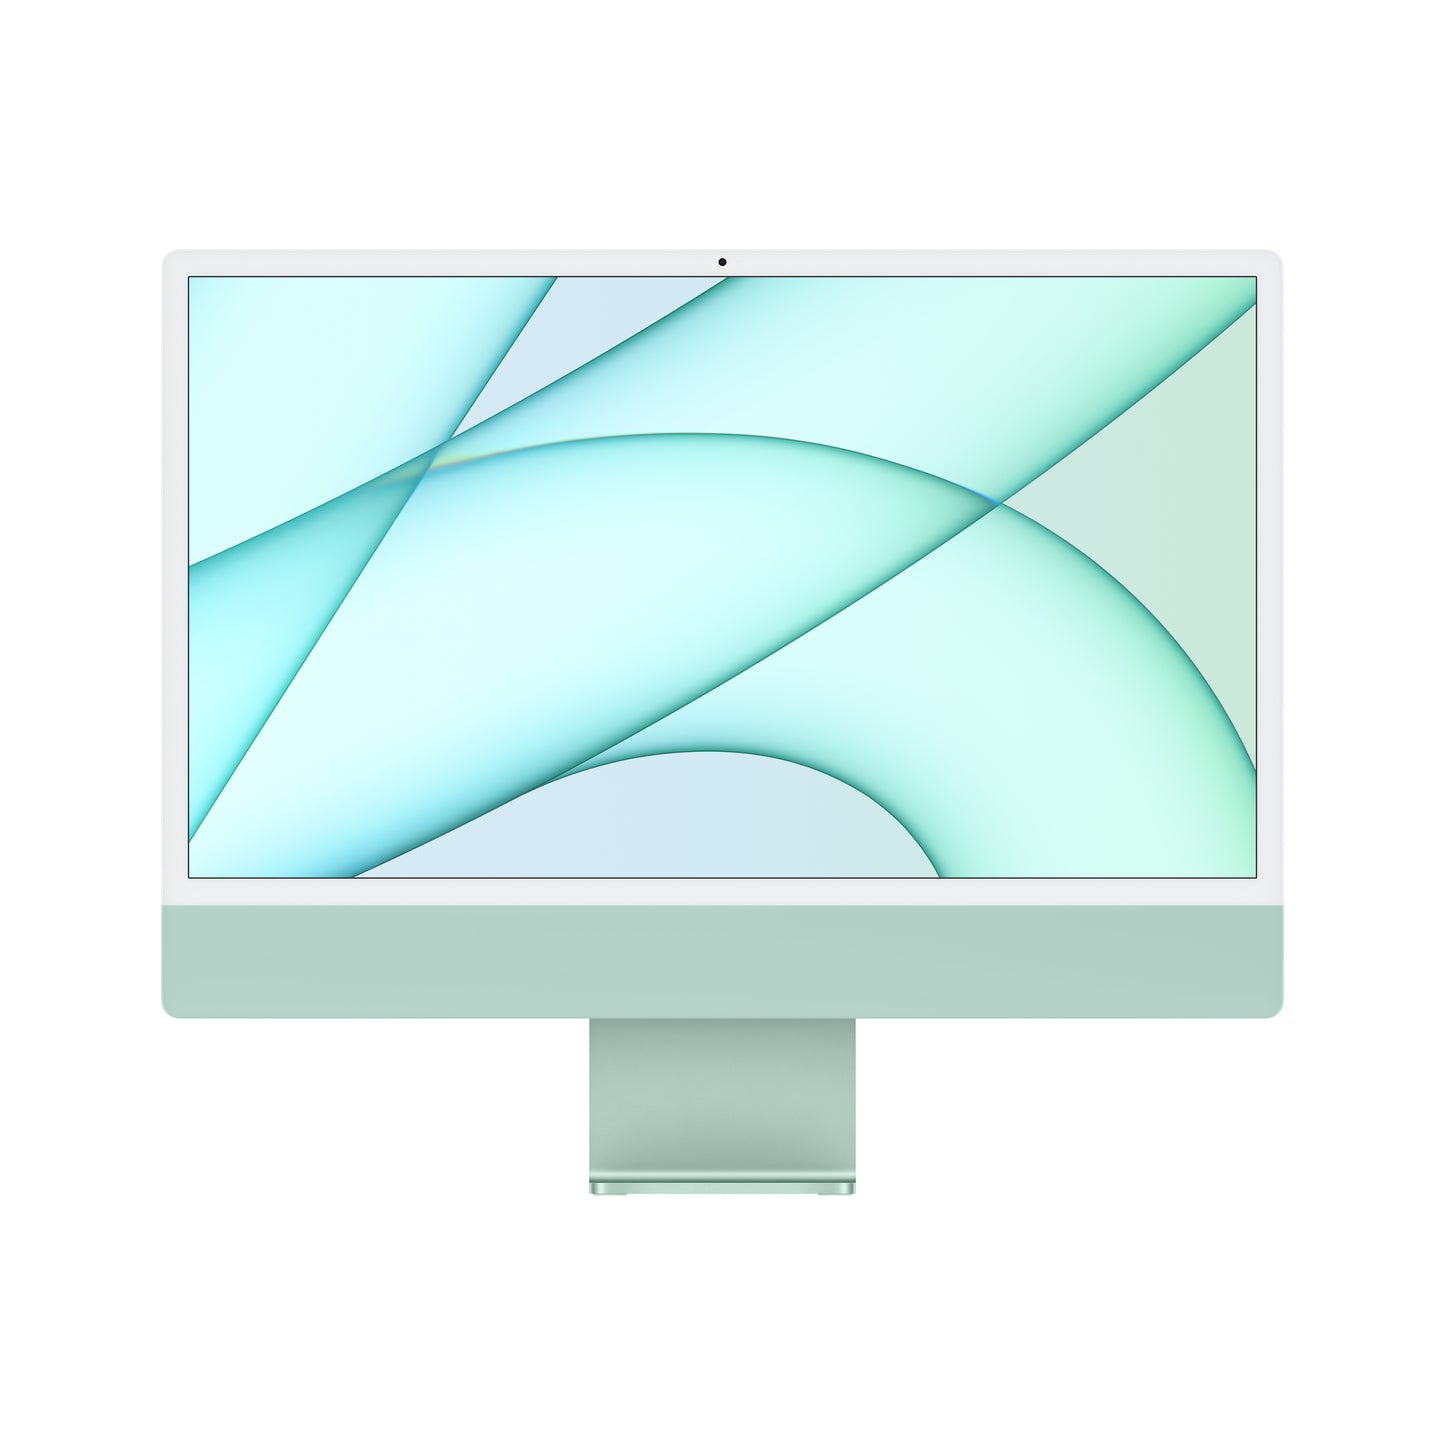 24-inch iMac with Retina 4.5K display: Apple M1 chip with 8_core CPU and 8_core GPU, 256GB - Green